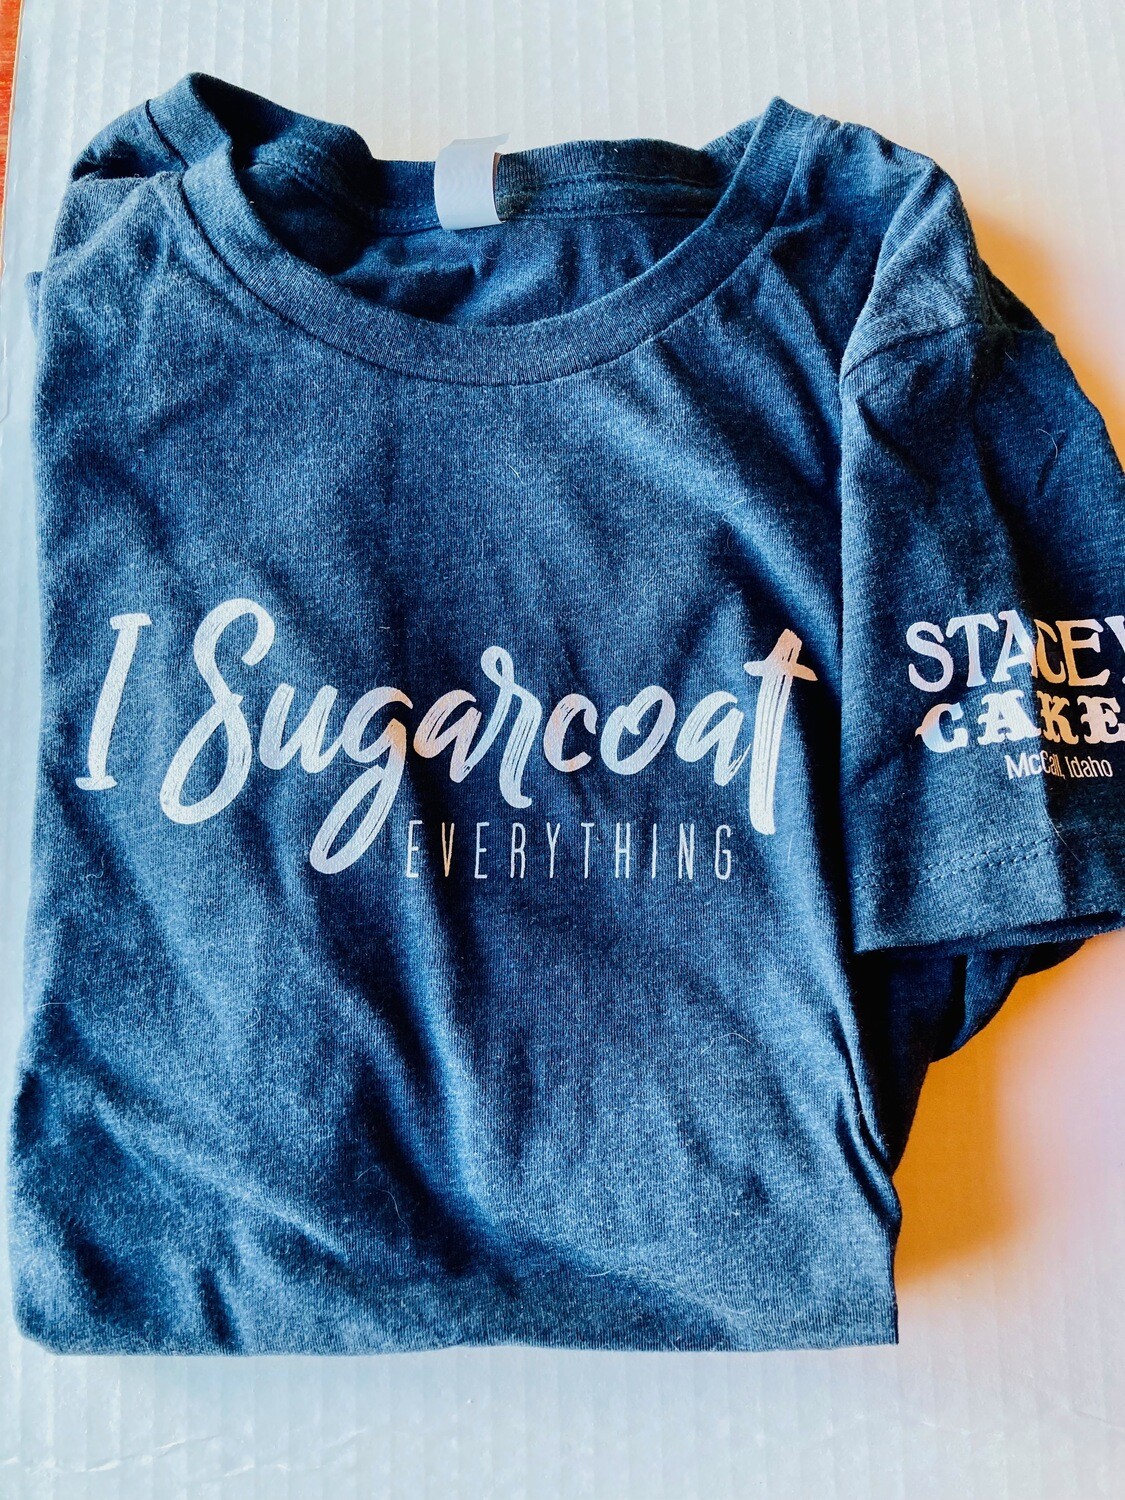 "I Sugarcoat" T-Shirt